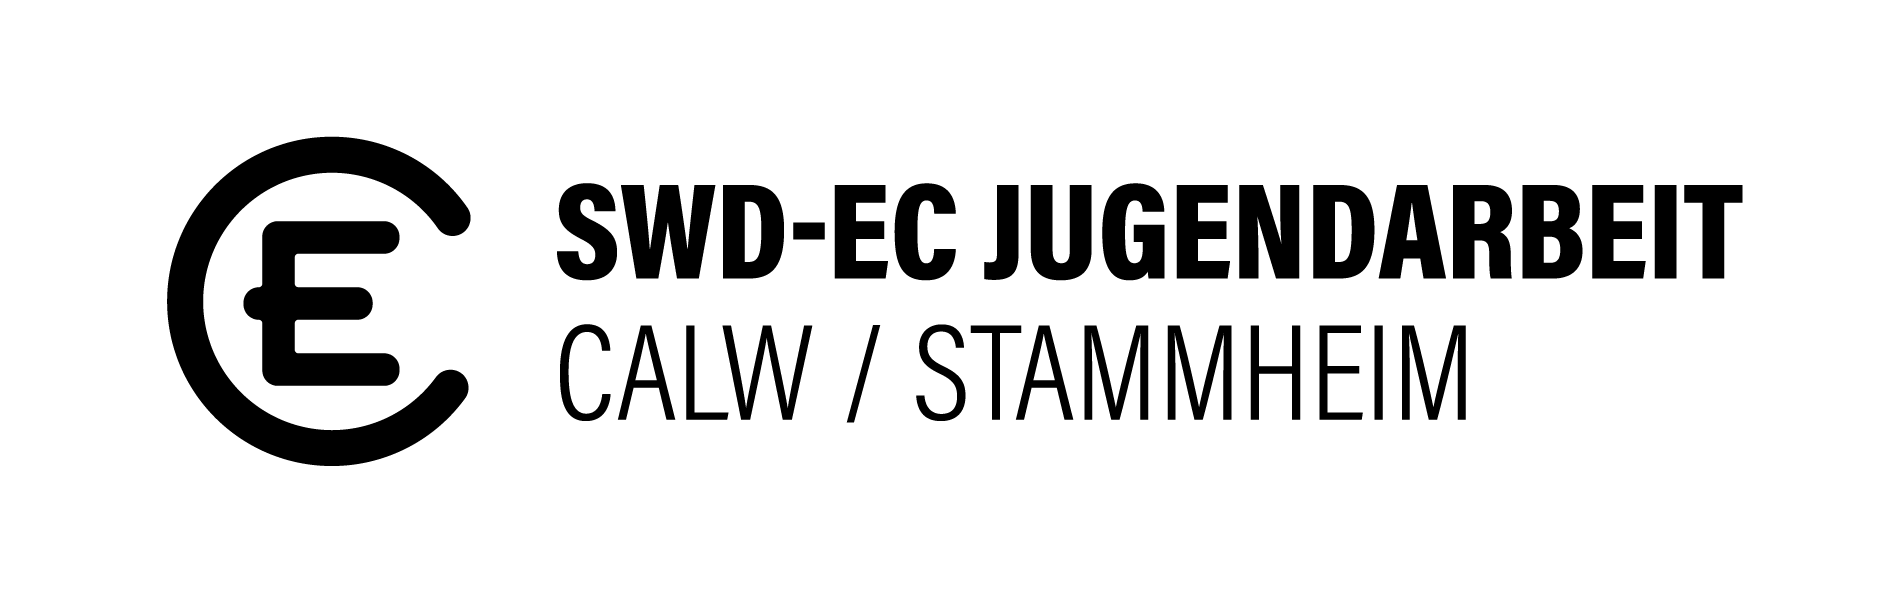 EC Calw/Stammheim